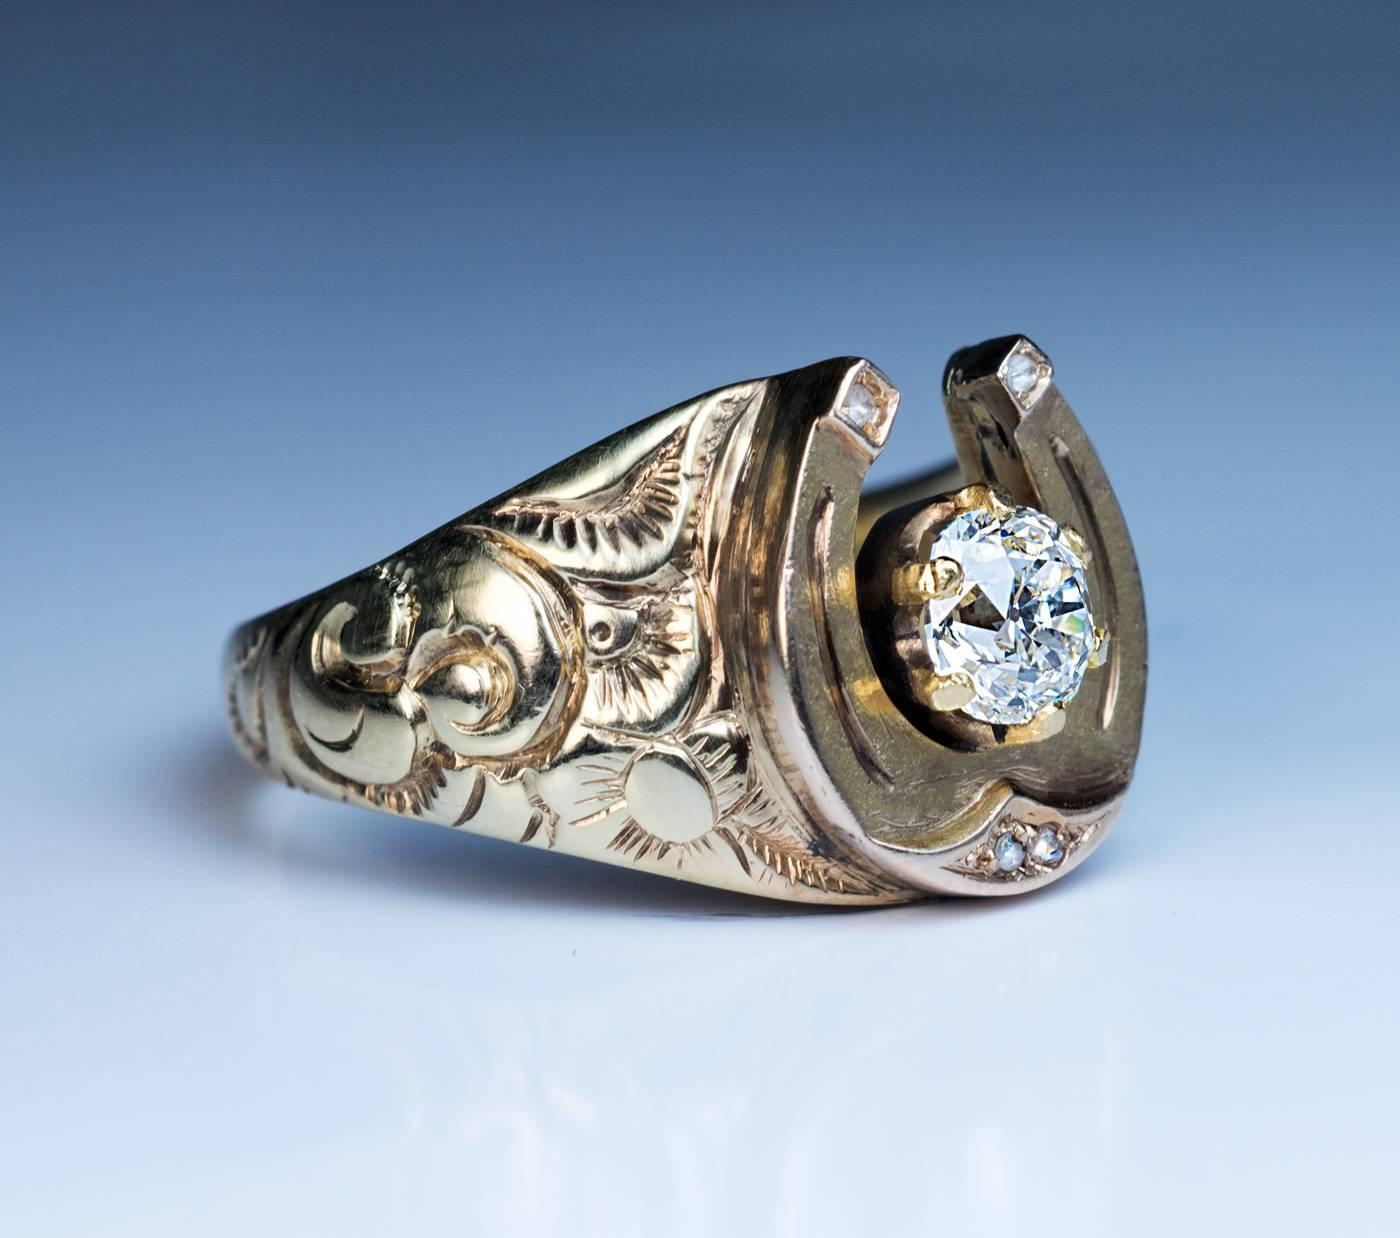 Antique Mid 1800s Diamond Gold Men’s Horseshoe Ring For Sale at 1stdibs